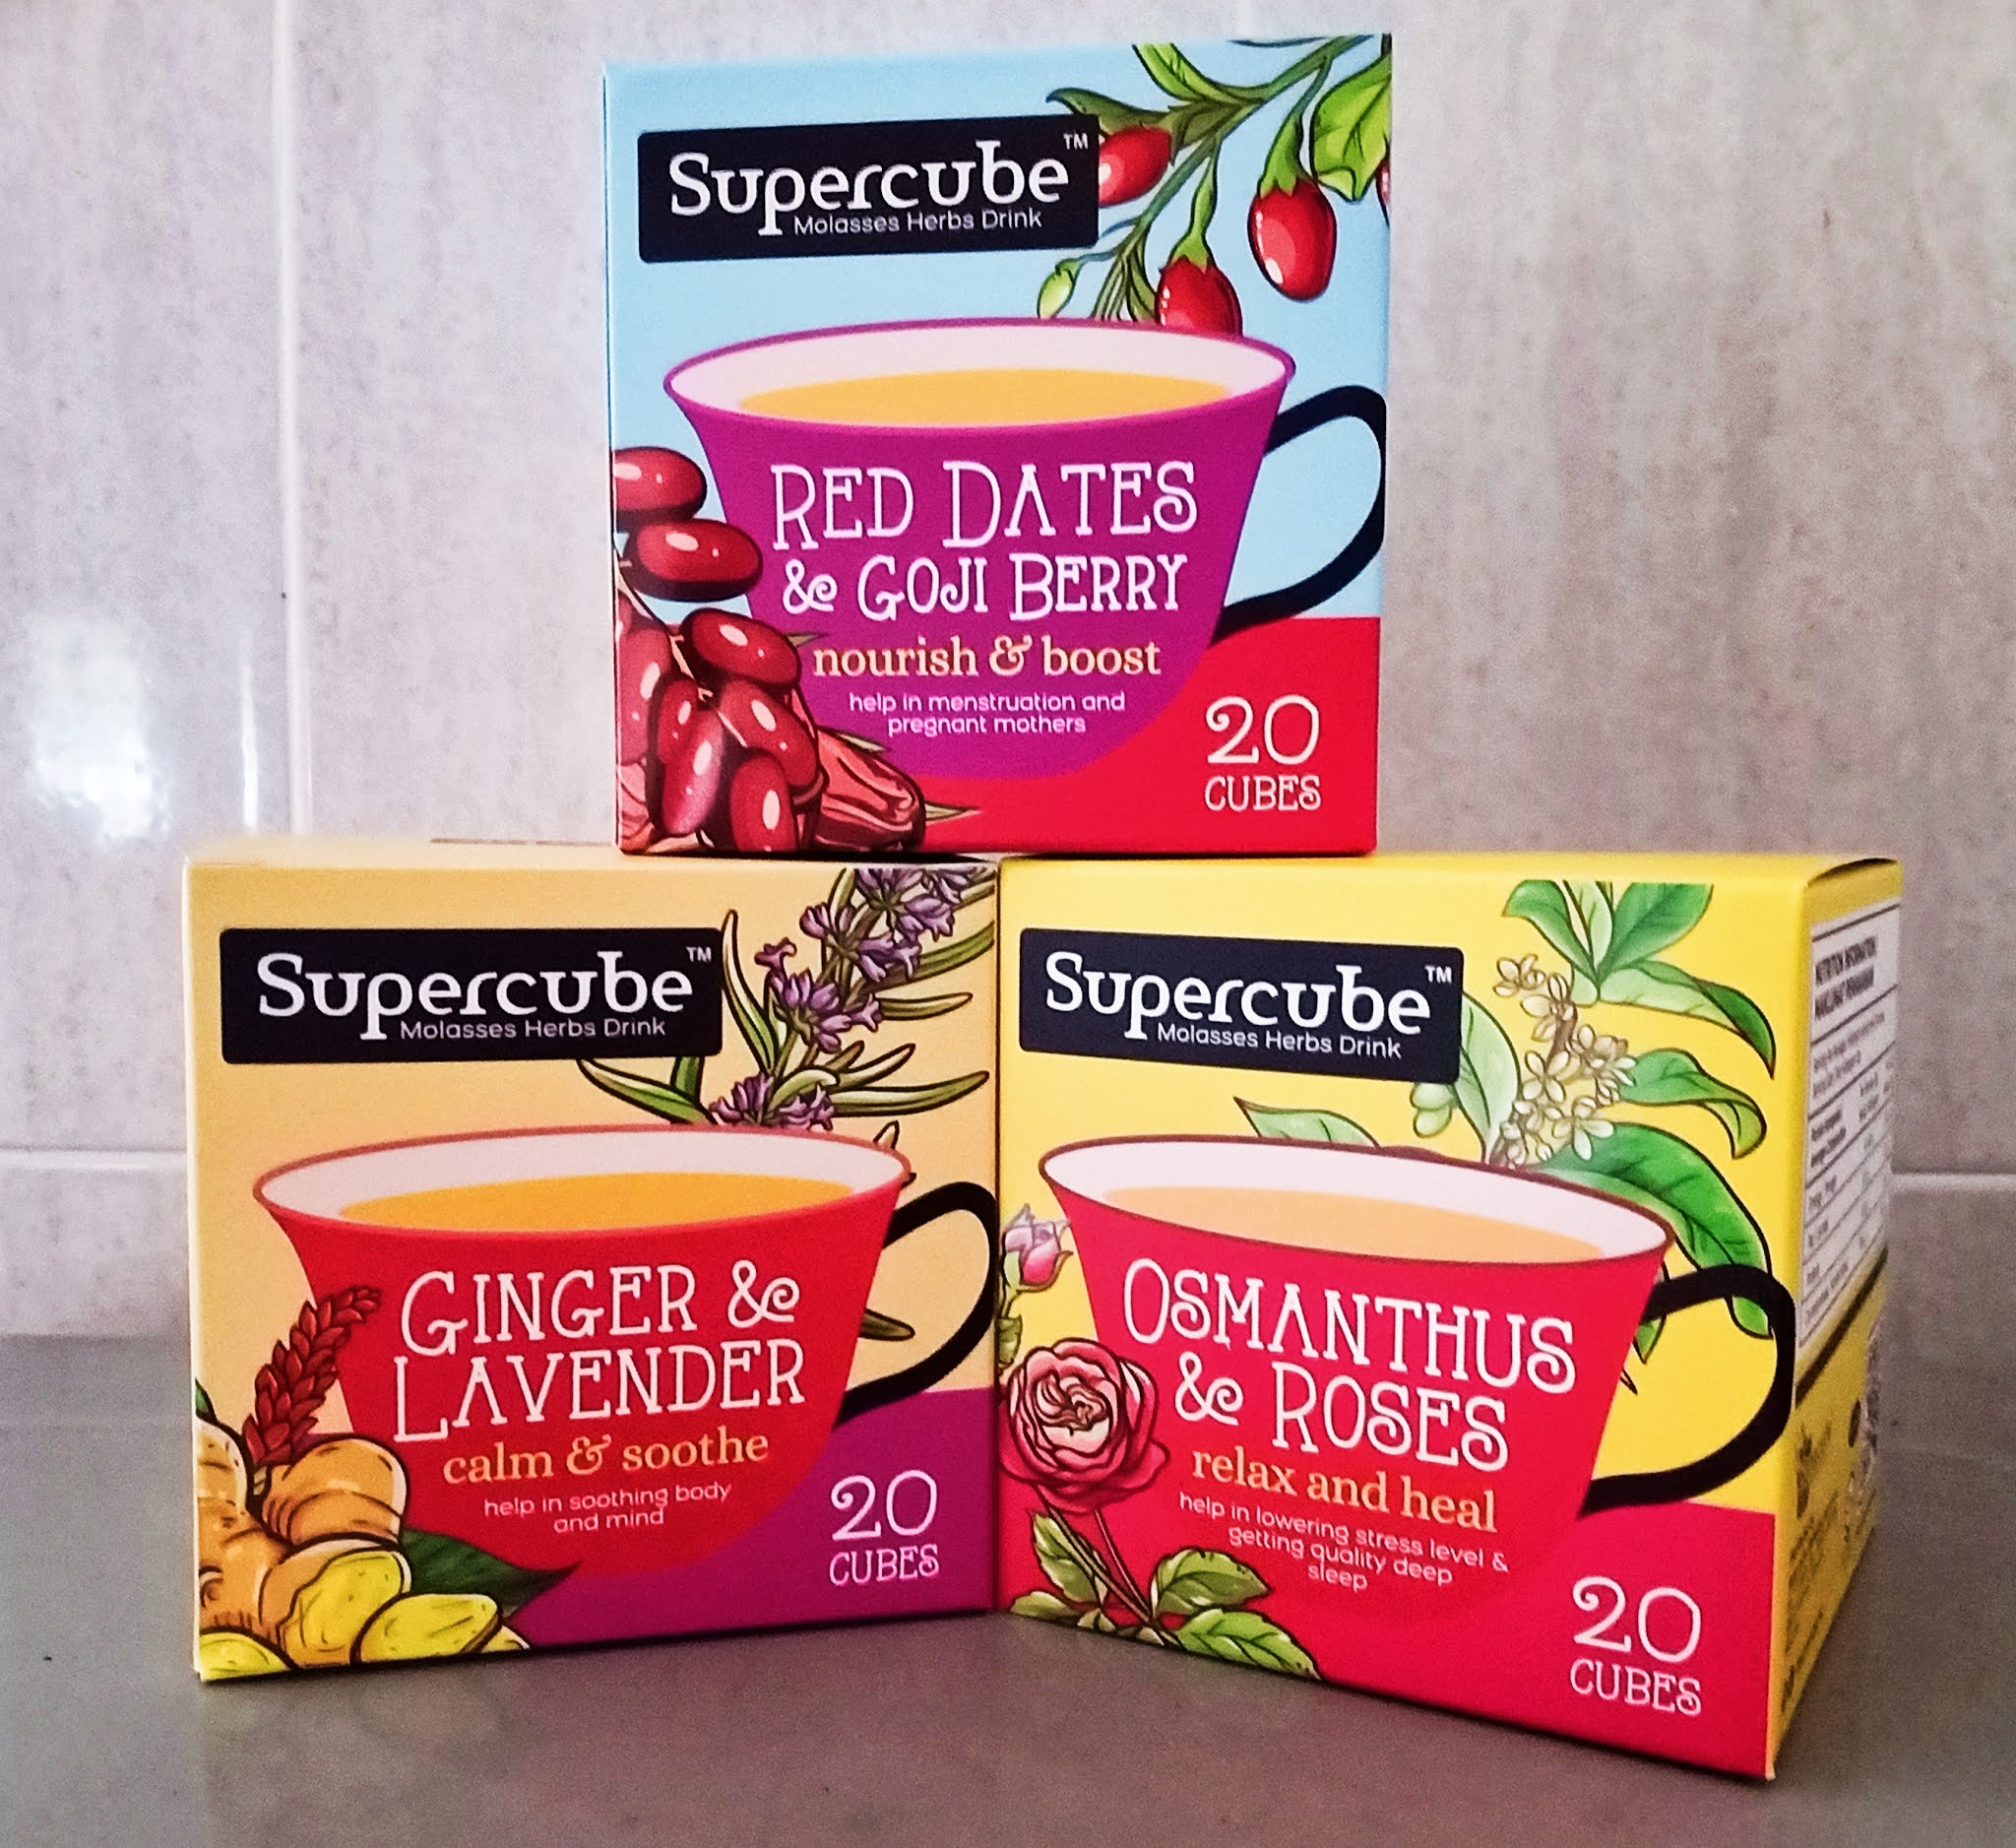 Tea supercube Supercube’s “food